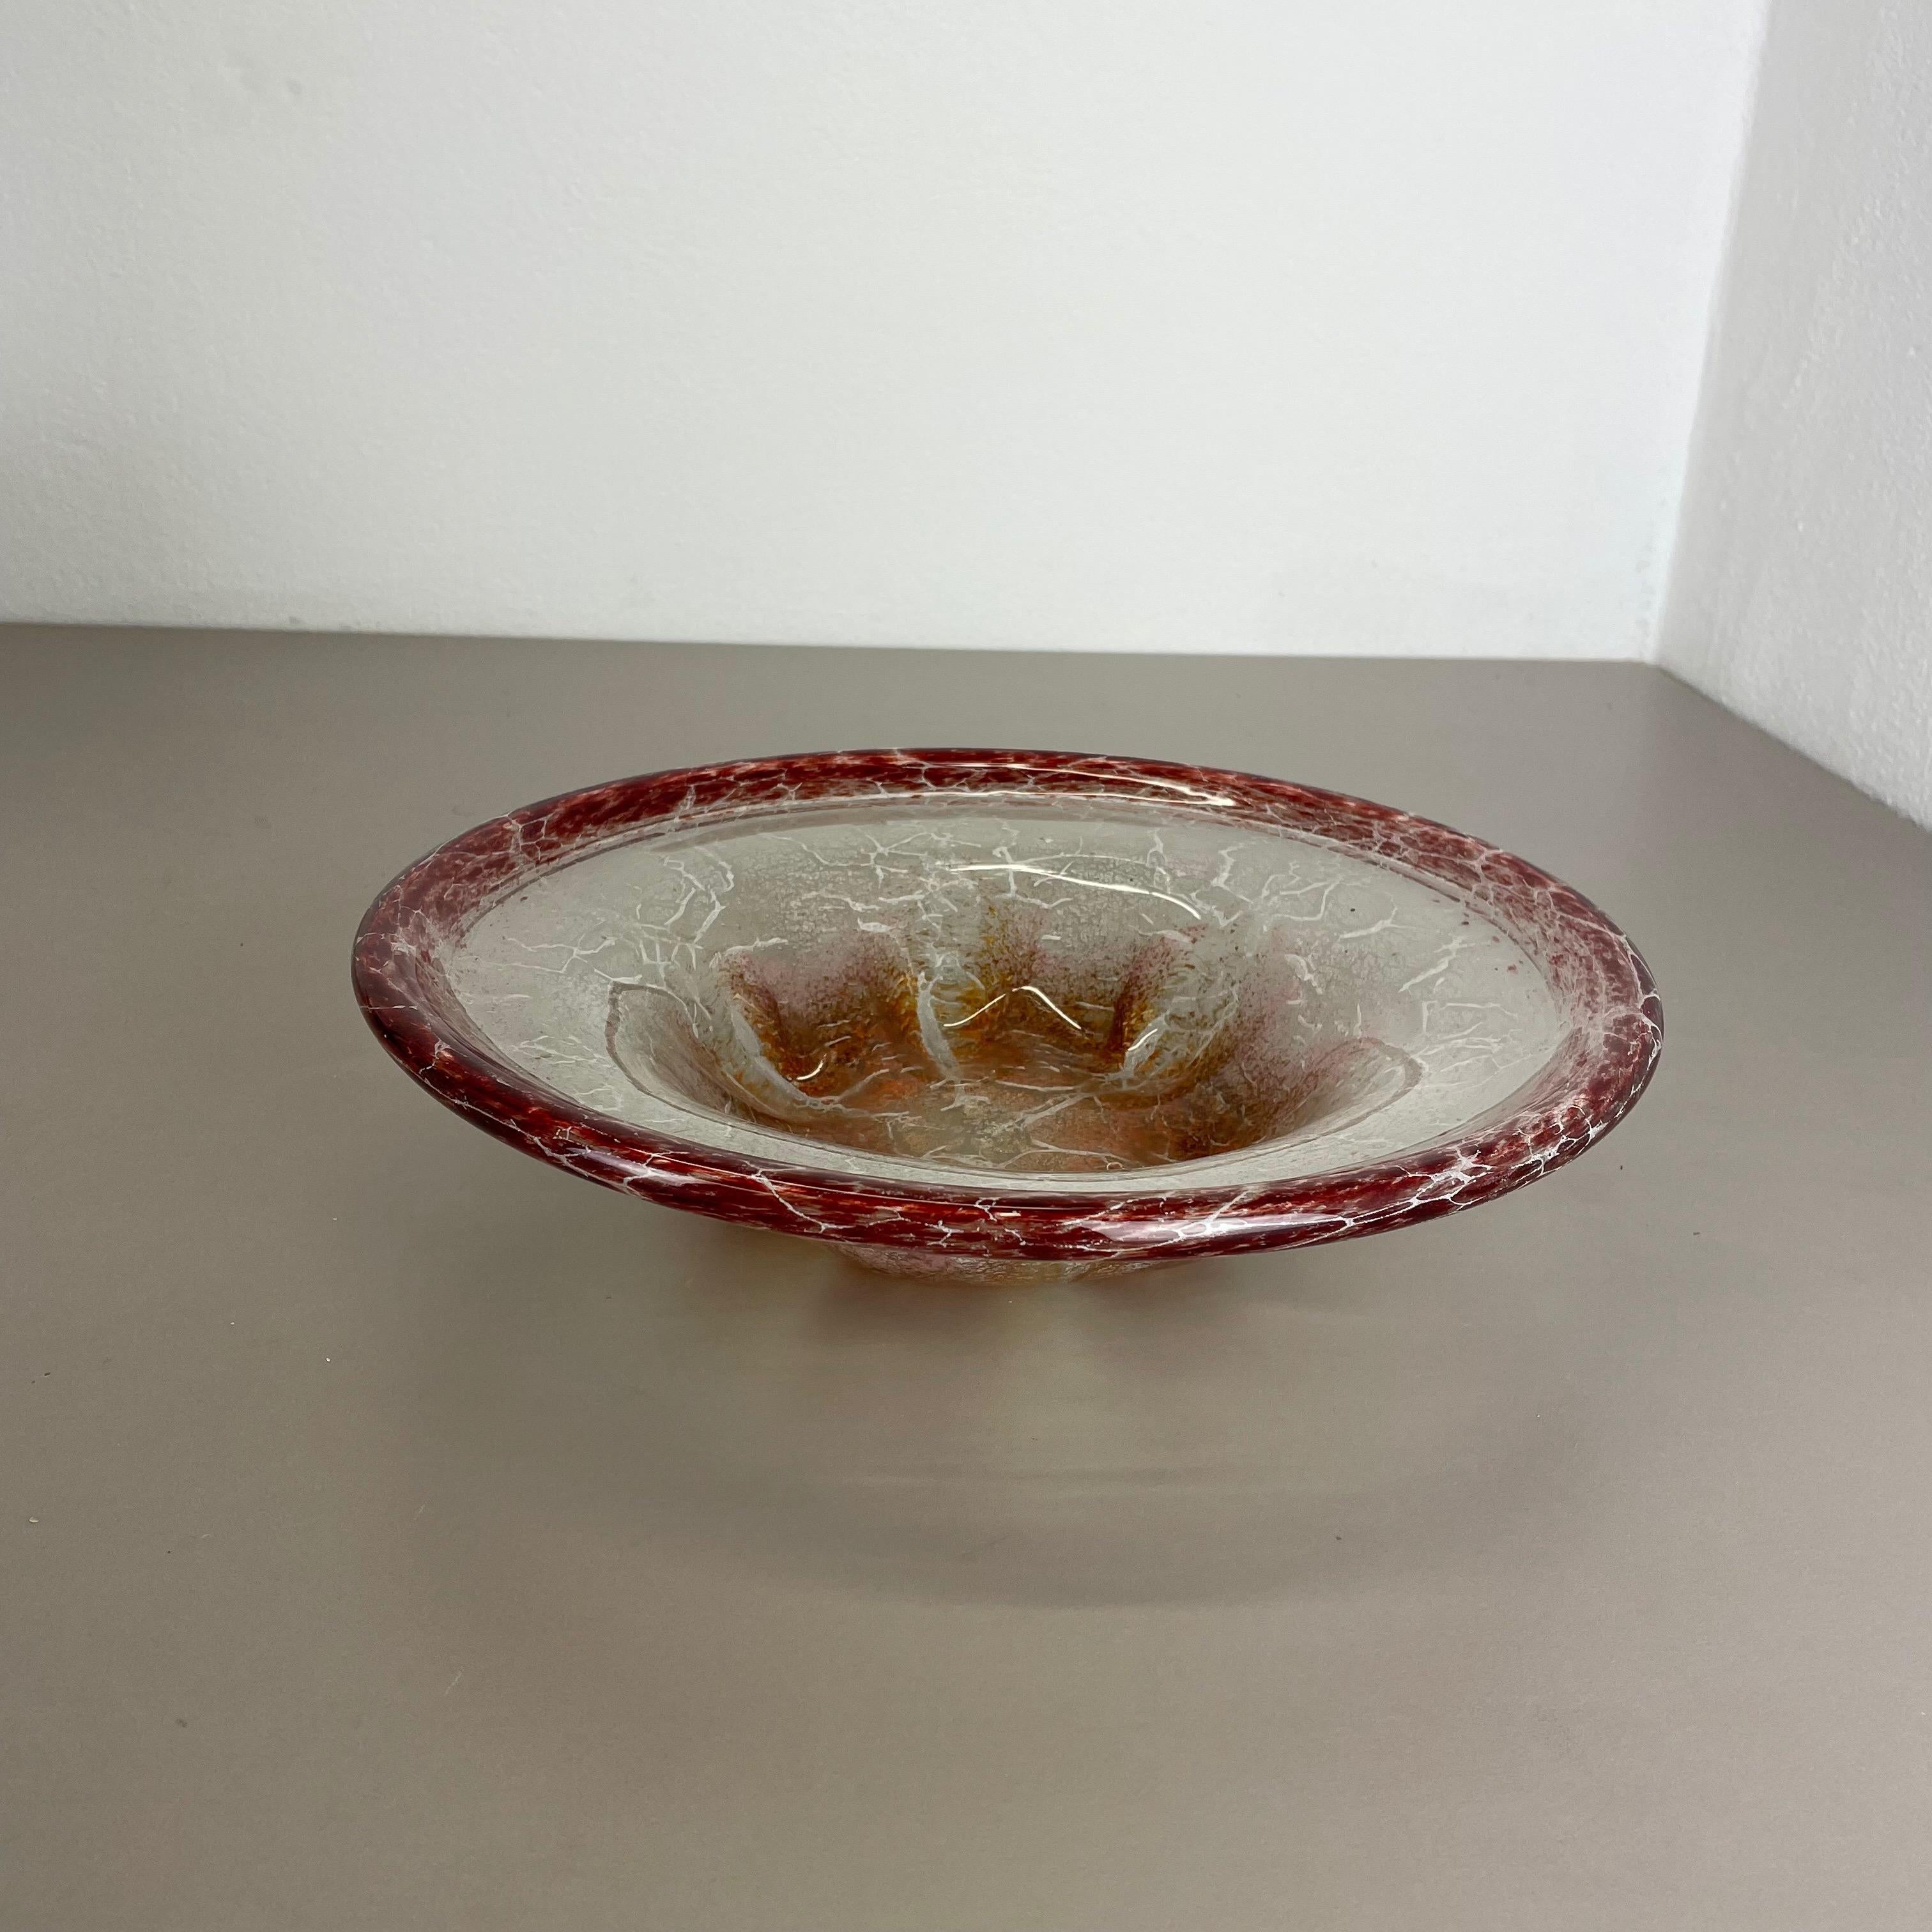 Article: Glass bowl



Producer: WMF, Germany 



Designer: Karl Wiedmann 


Age: 1930s



Description: 

Wonderful heavy Art Deco glass element designed by Karl Wiedmann and produced WMF, Germany in the 1930s. This glass bowl is